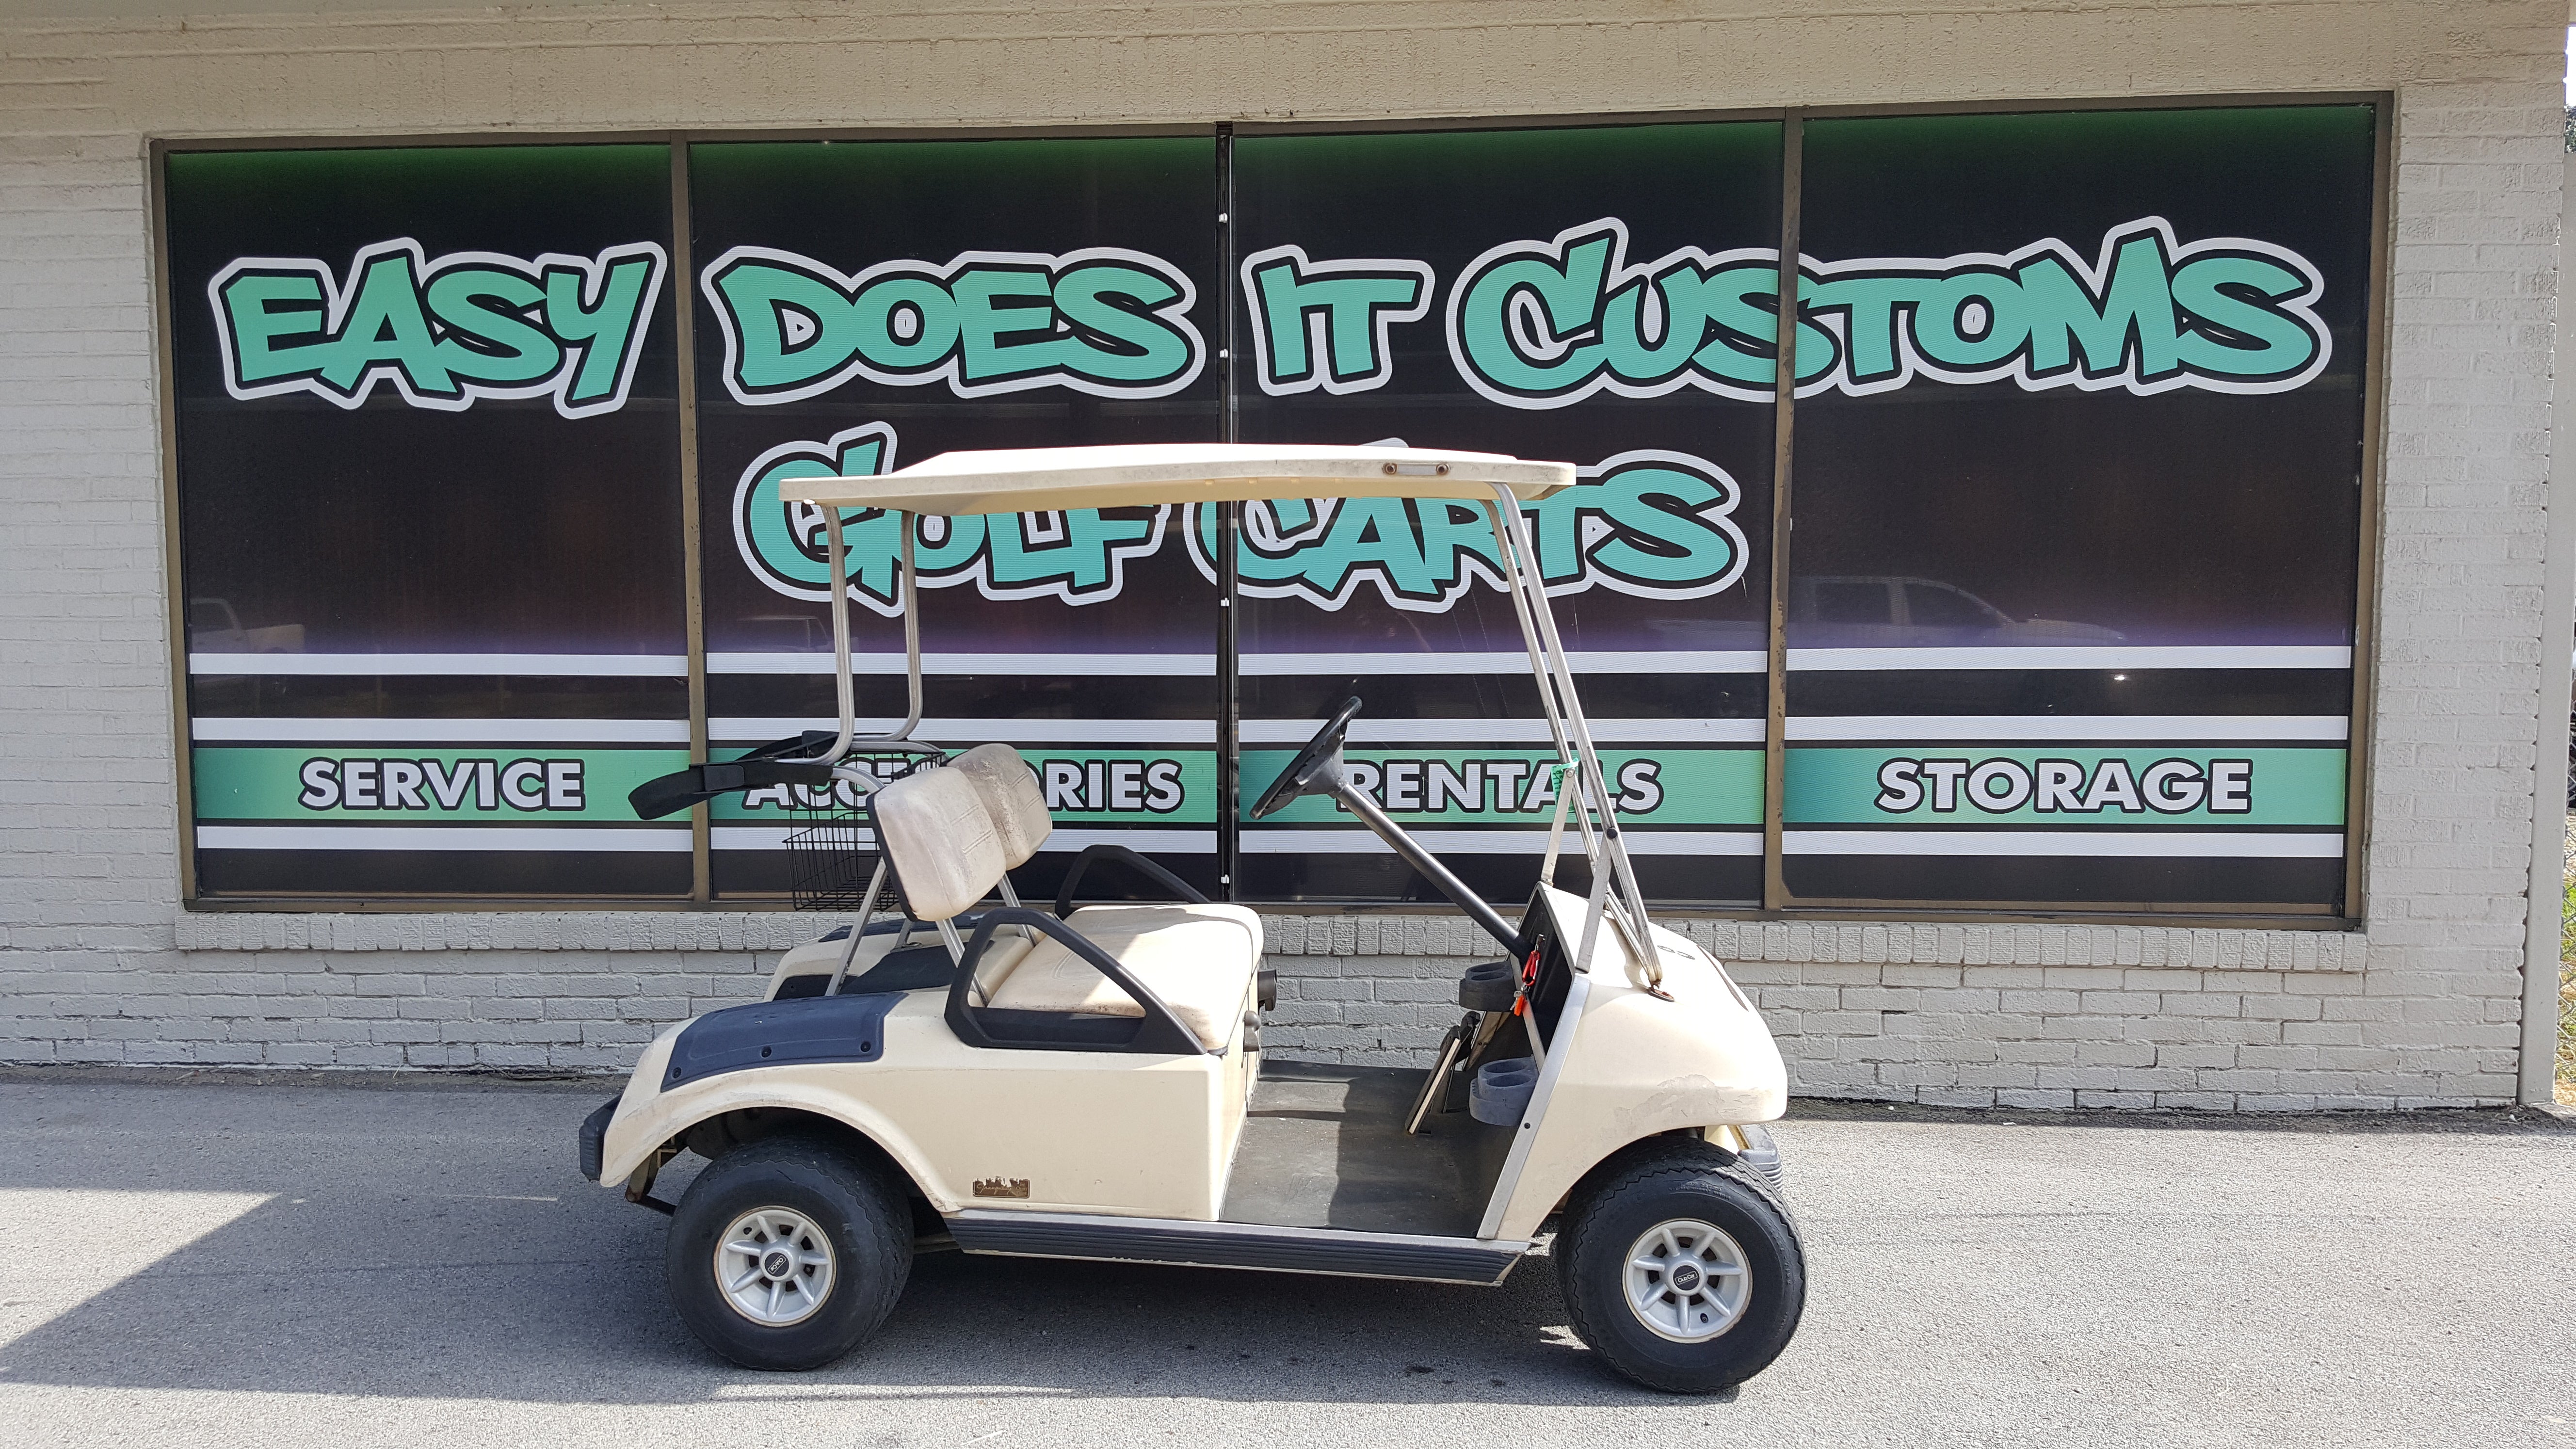 Gas Club Car DS with Custom Wheels *SOLD* – Easy Does It Customs LLC